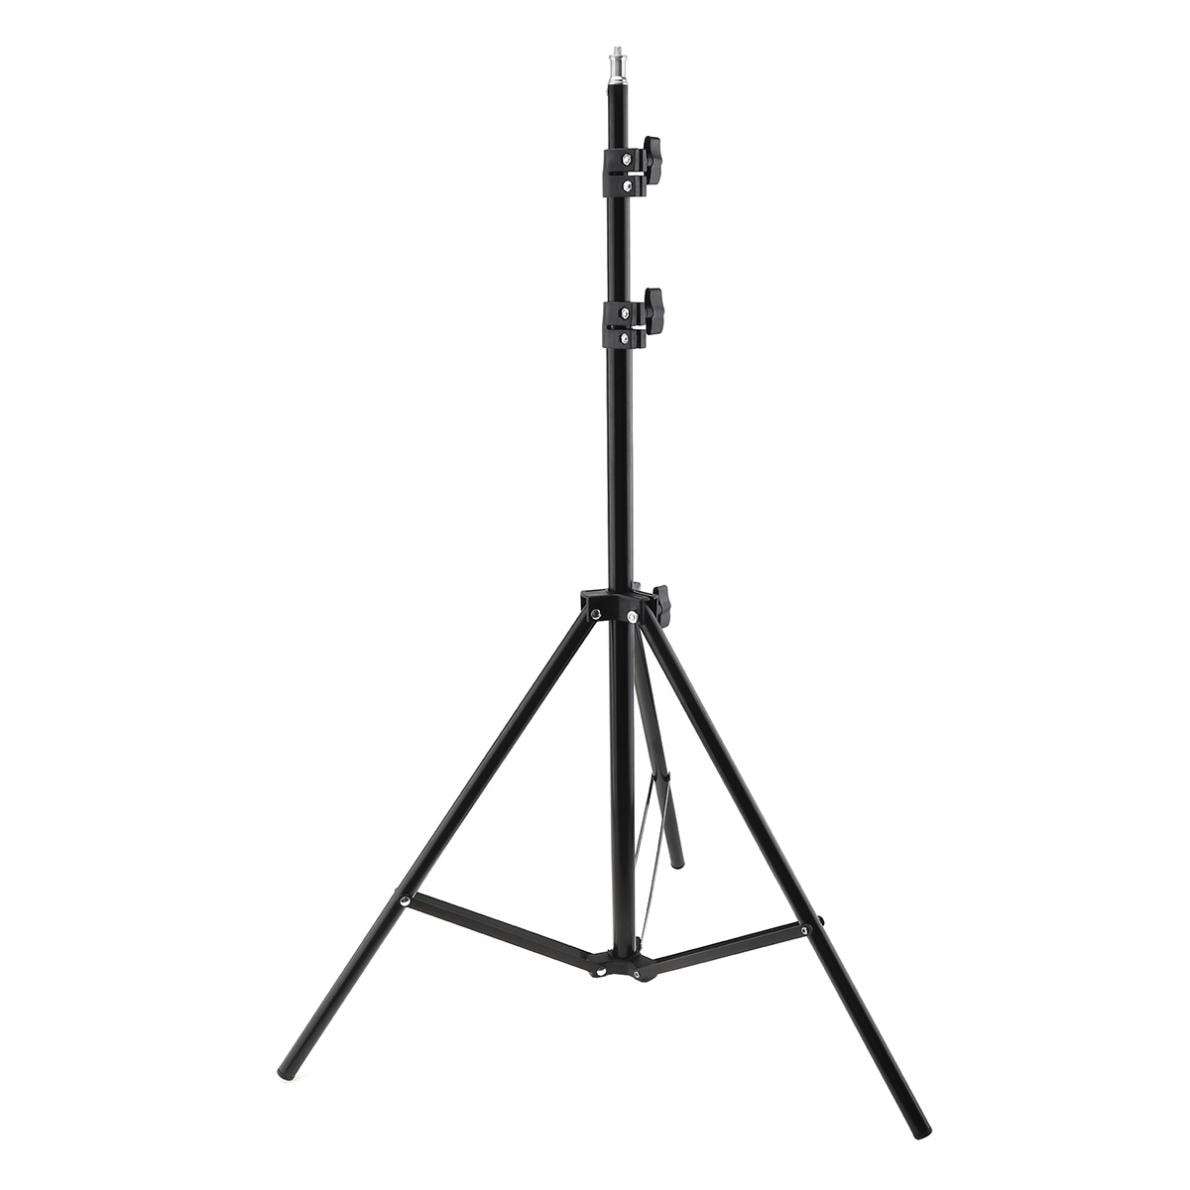 Adjustable 210cm Light Stand Tripod Max. 2.1m for Studio Photo Flash LED Video Light